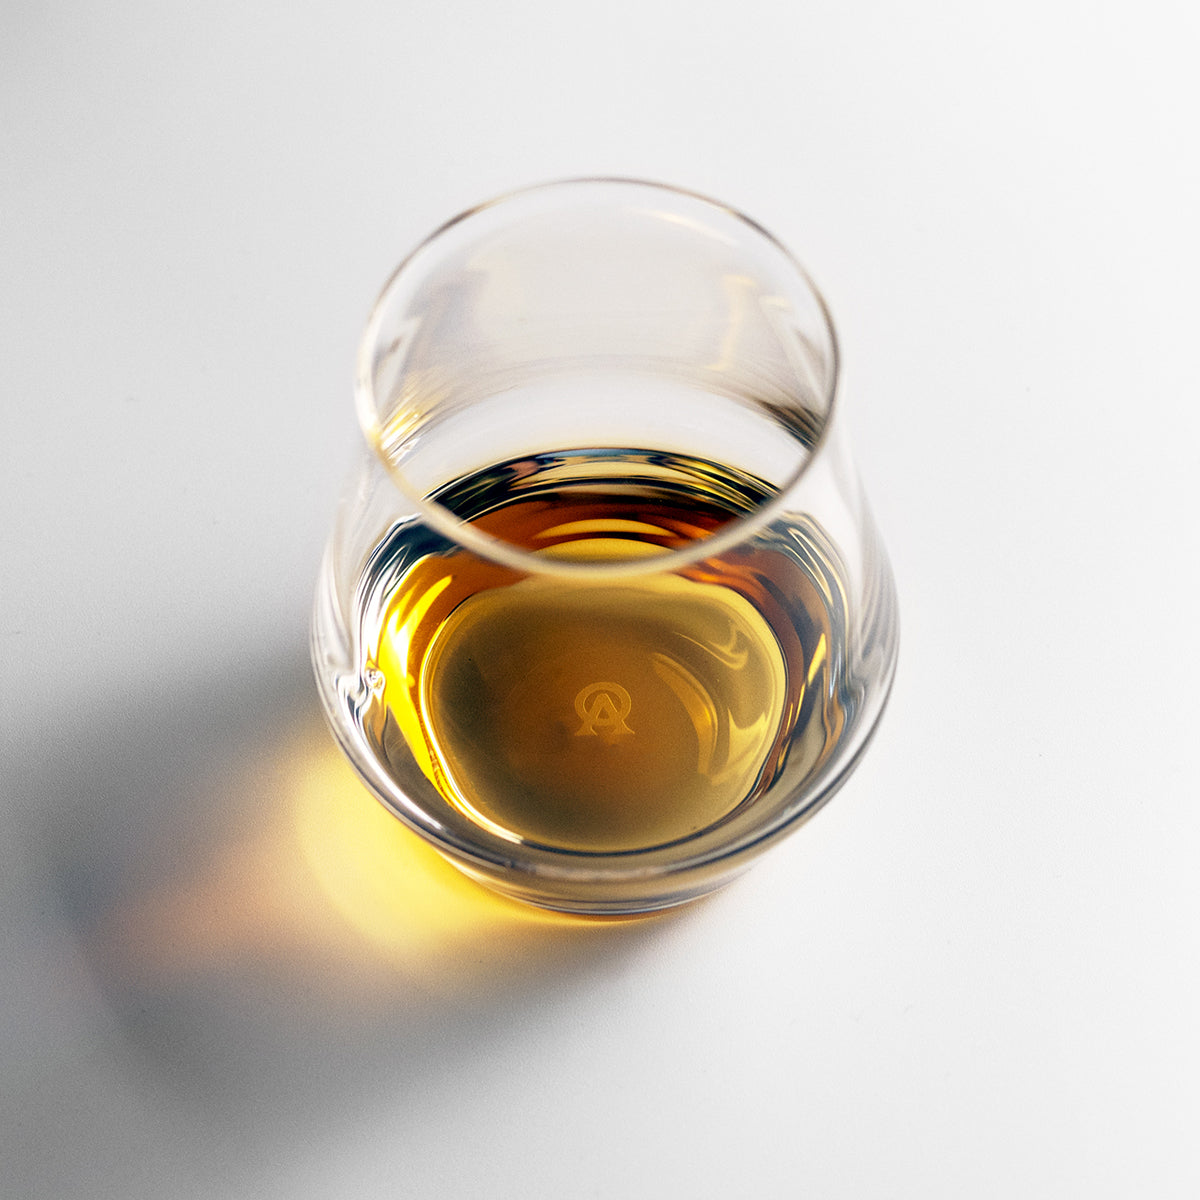 Whiskey Glass: Aged & Ore's Neat Traveler – The Right Spirit